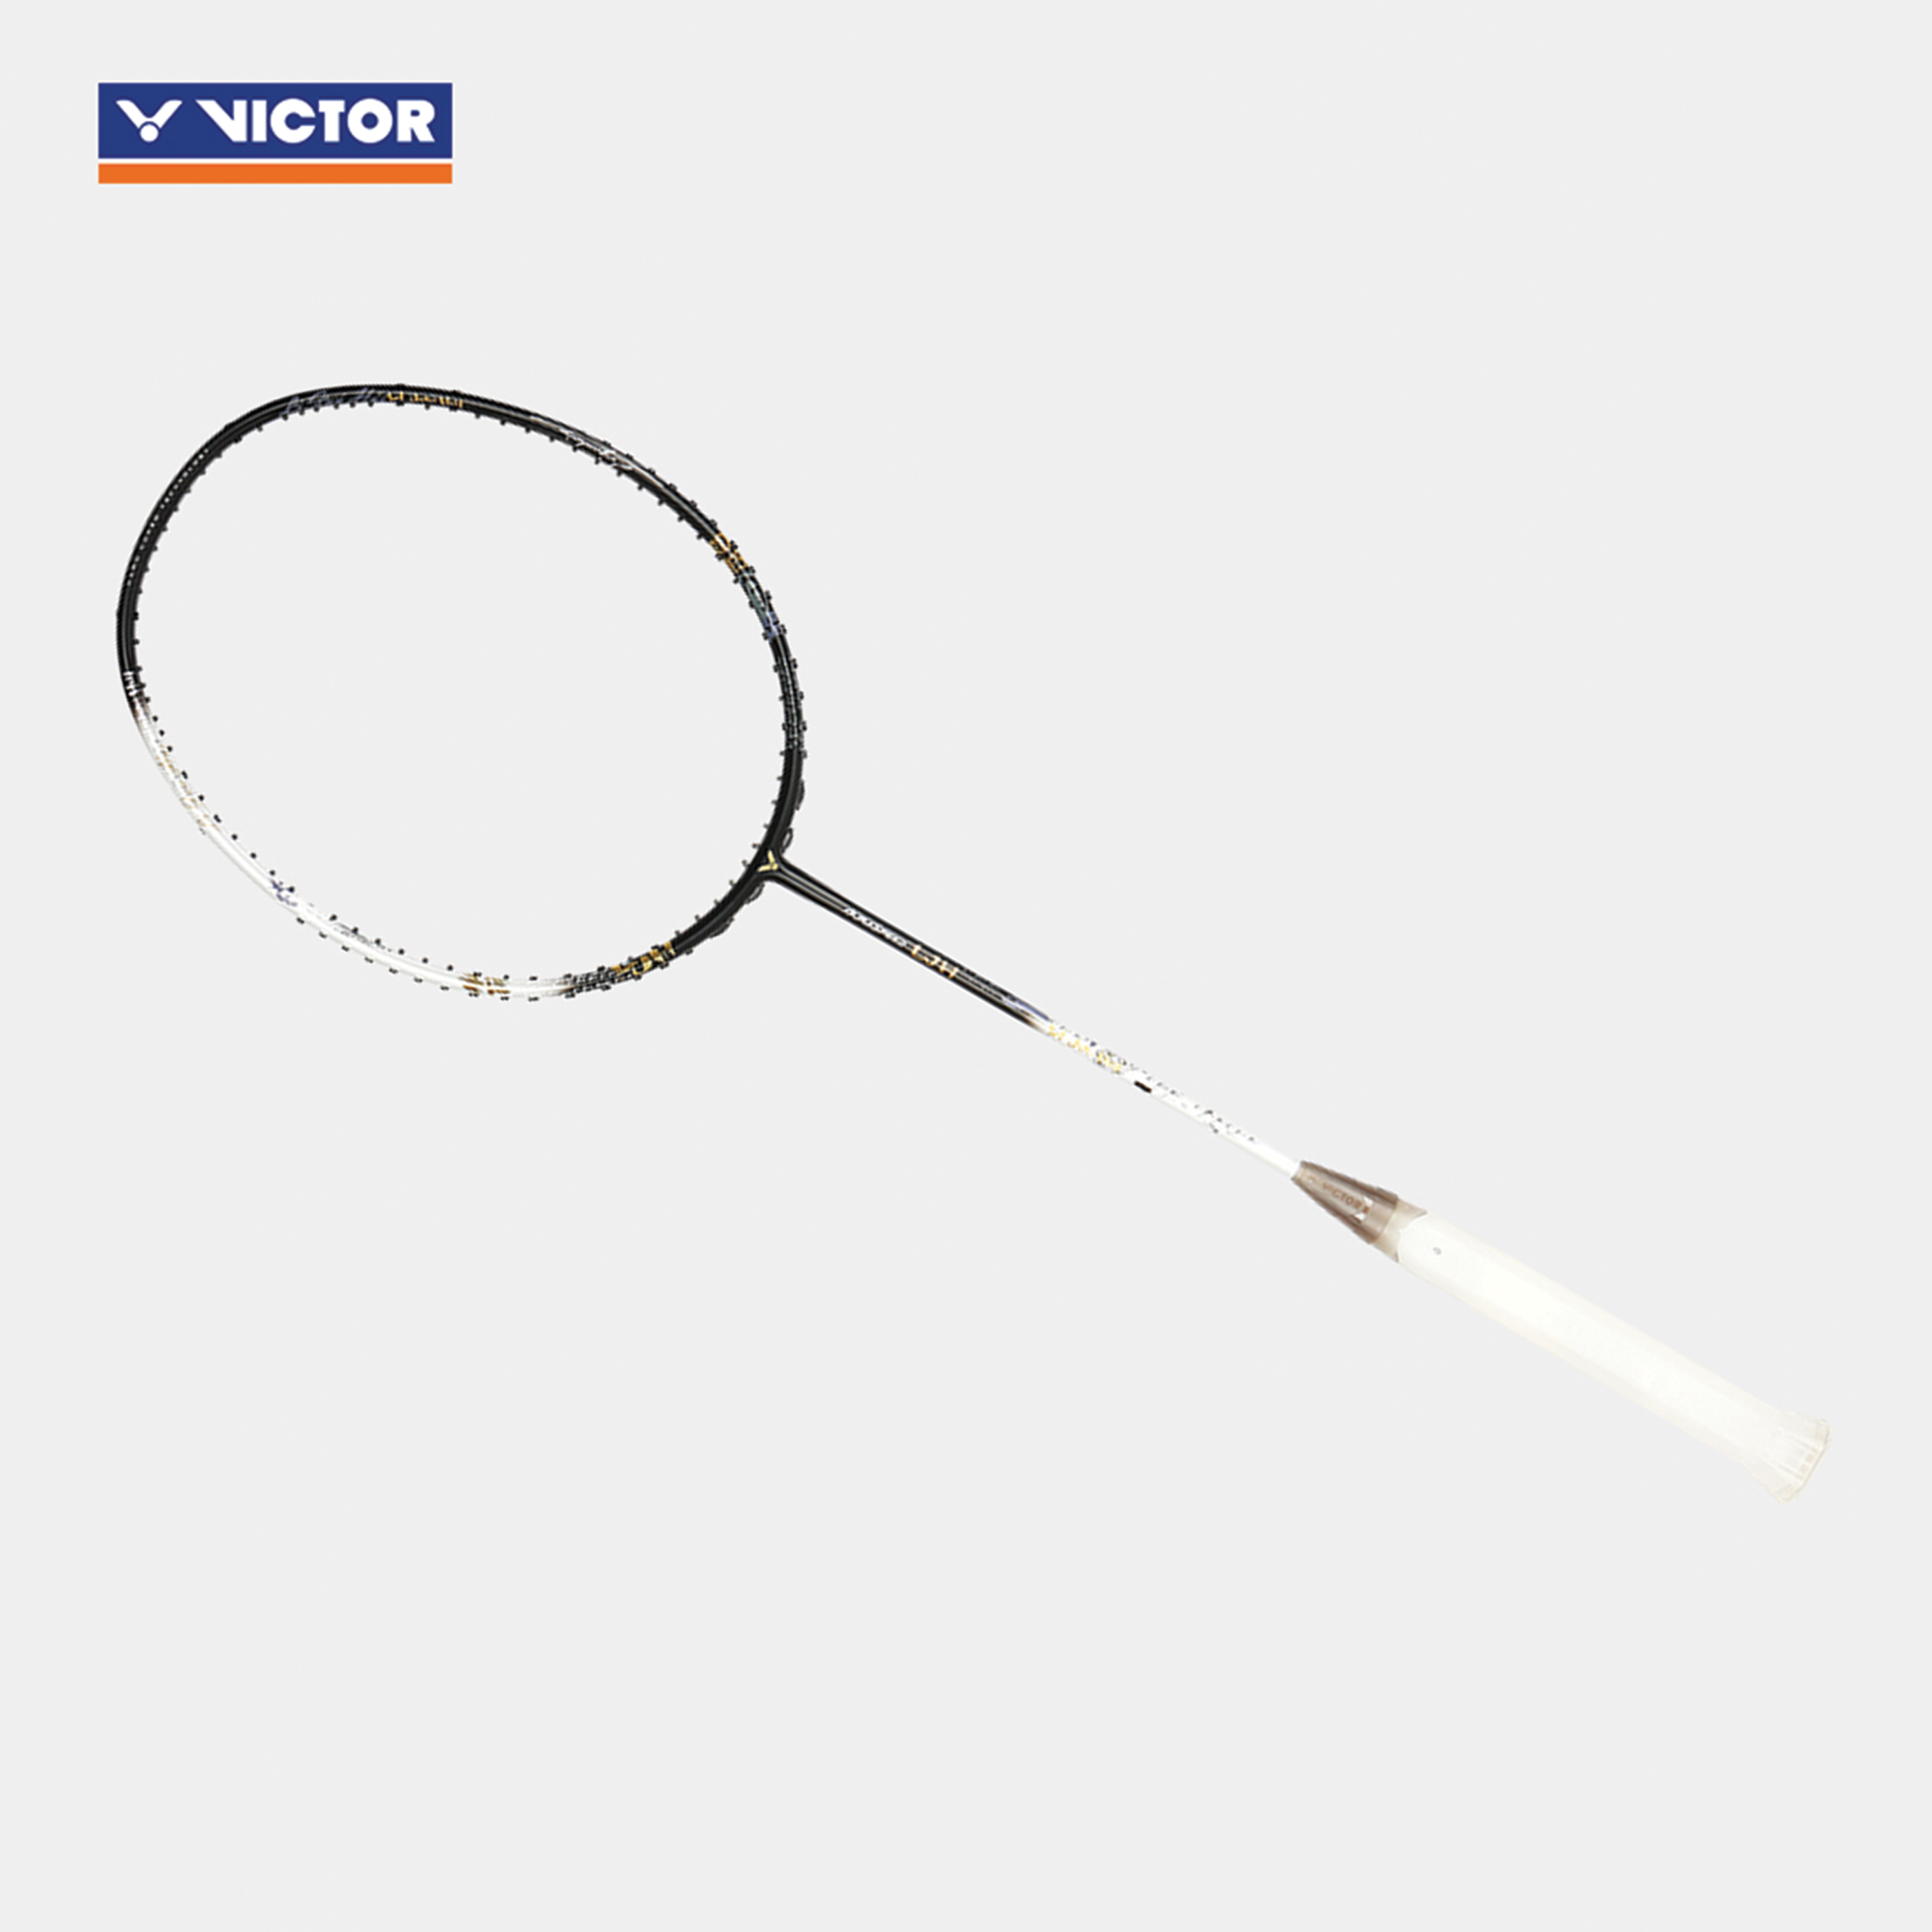 Victor Auraspeed ARS-LJH Speed Attacking Badminton Racquet 4U(83g)G5